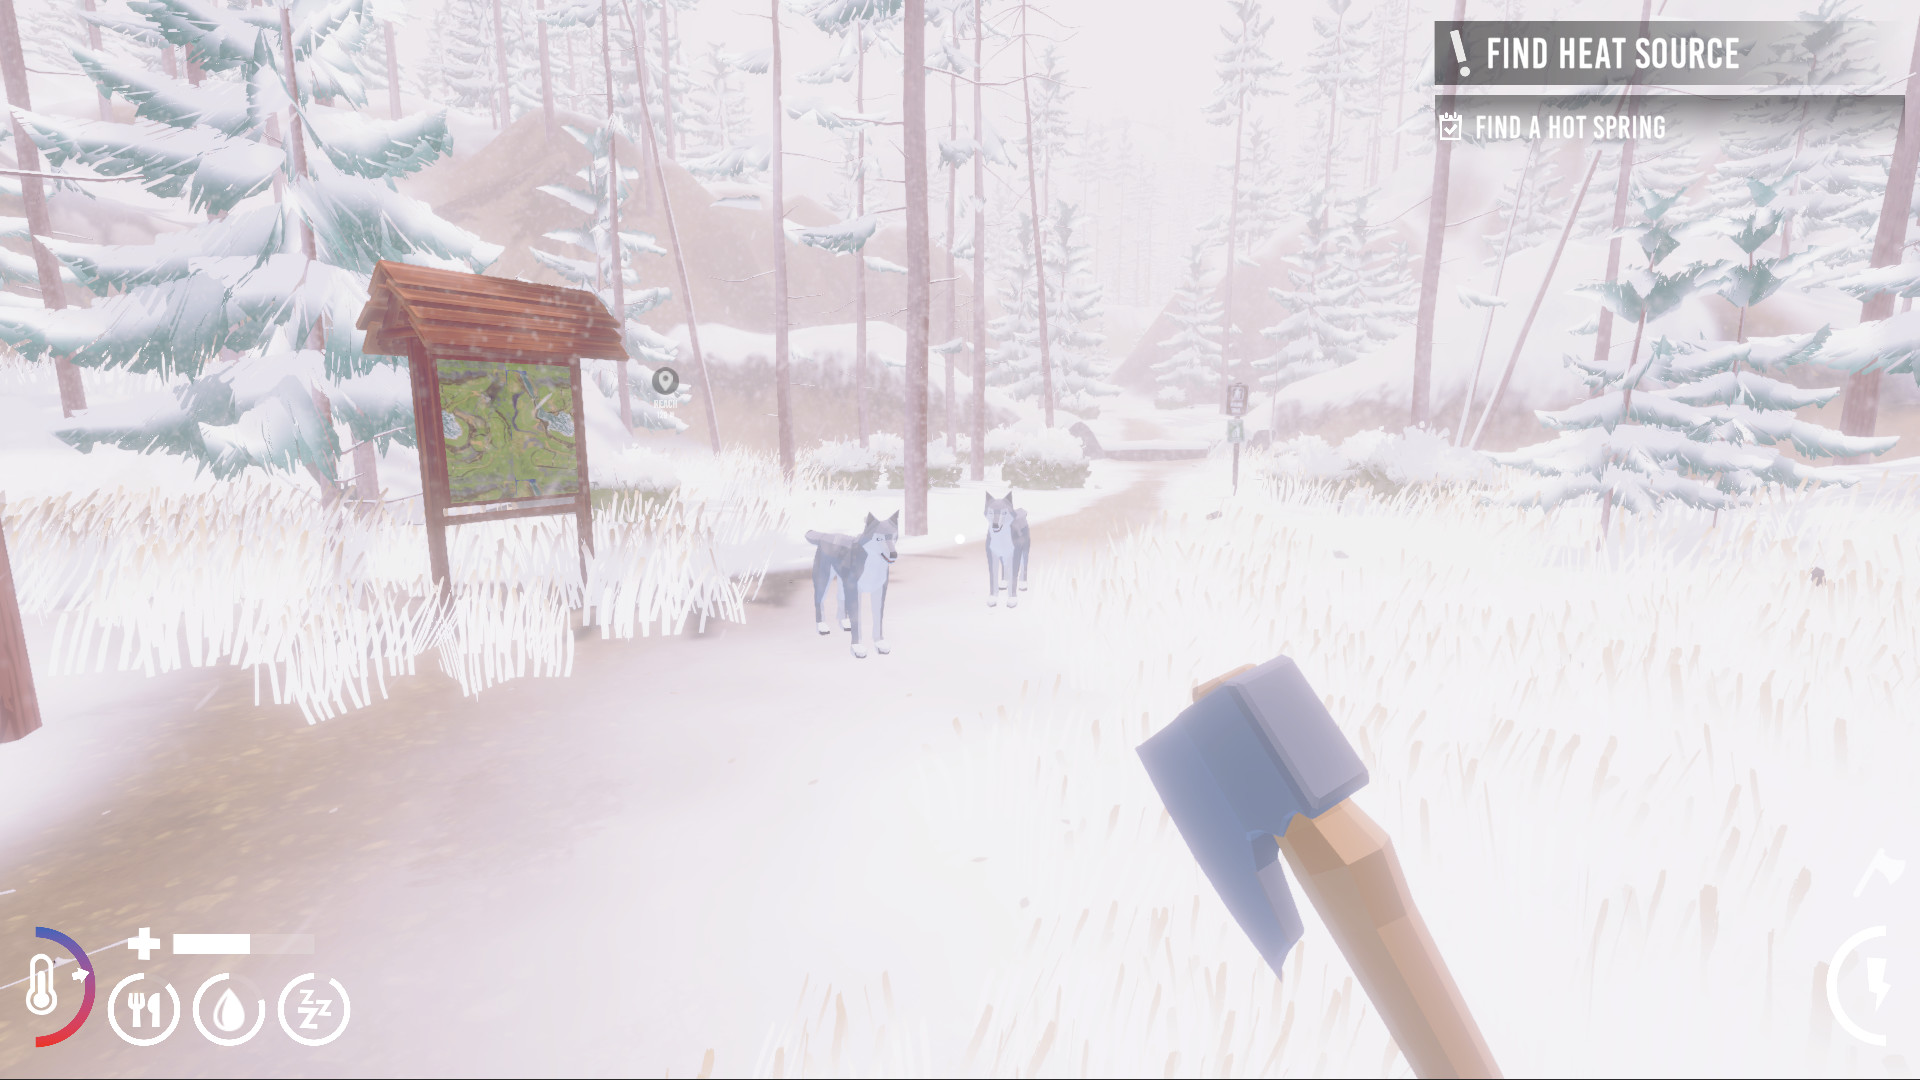 Camping Simulator: The Squad screenshot